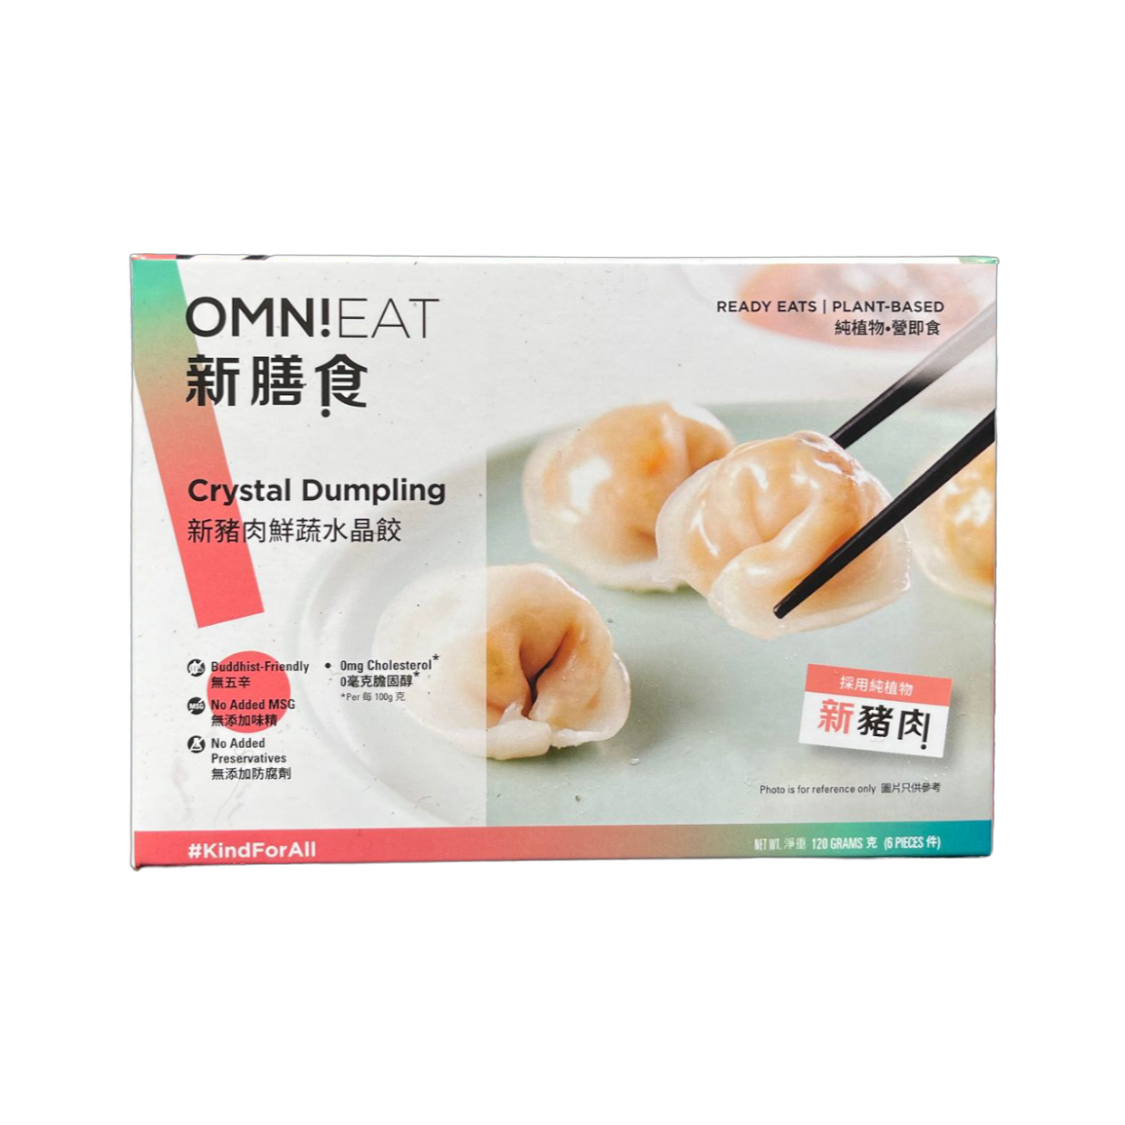 Image OmniEAT Dumpling 新猪肉-鲜蔬水晶饺 120grams